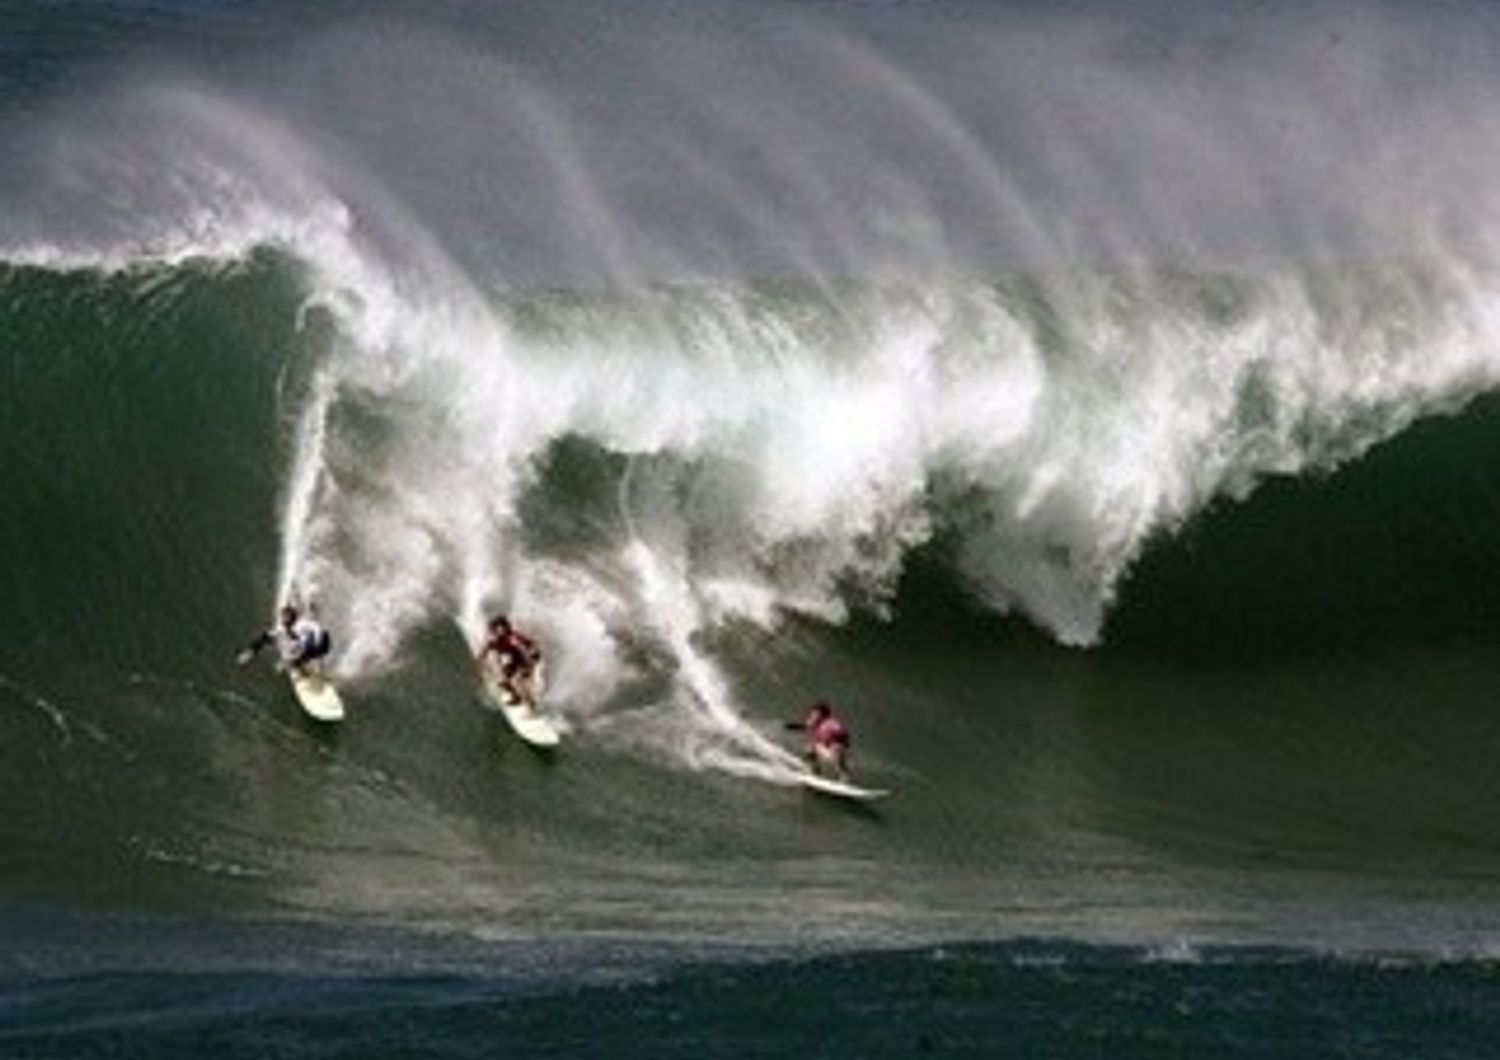 USA: ALLE HAWAII ONDE-RECORD, GARA ESTREMA TRA SURFISTI